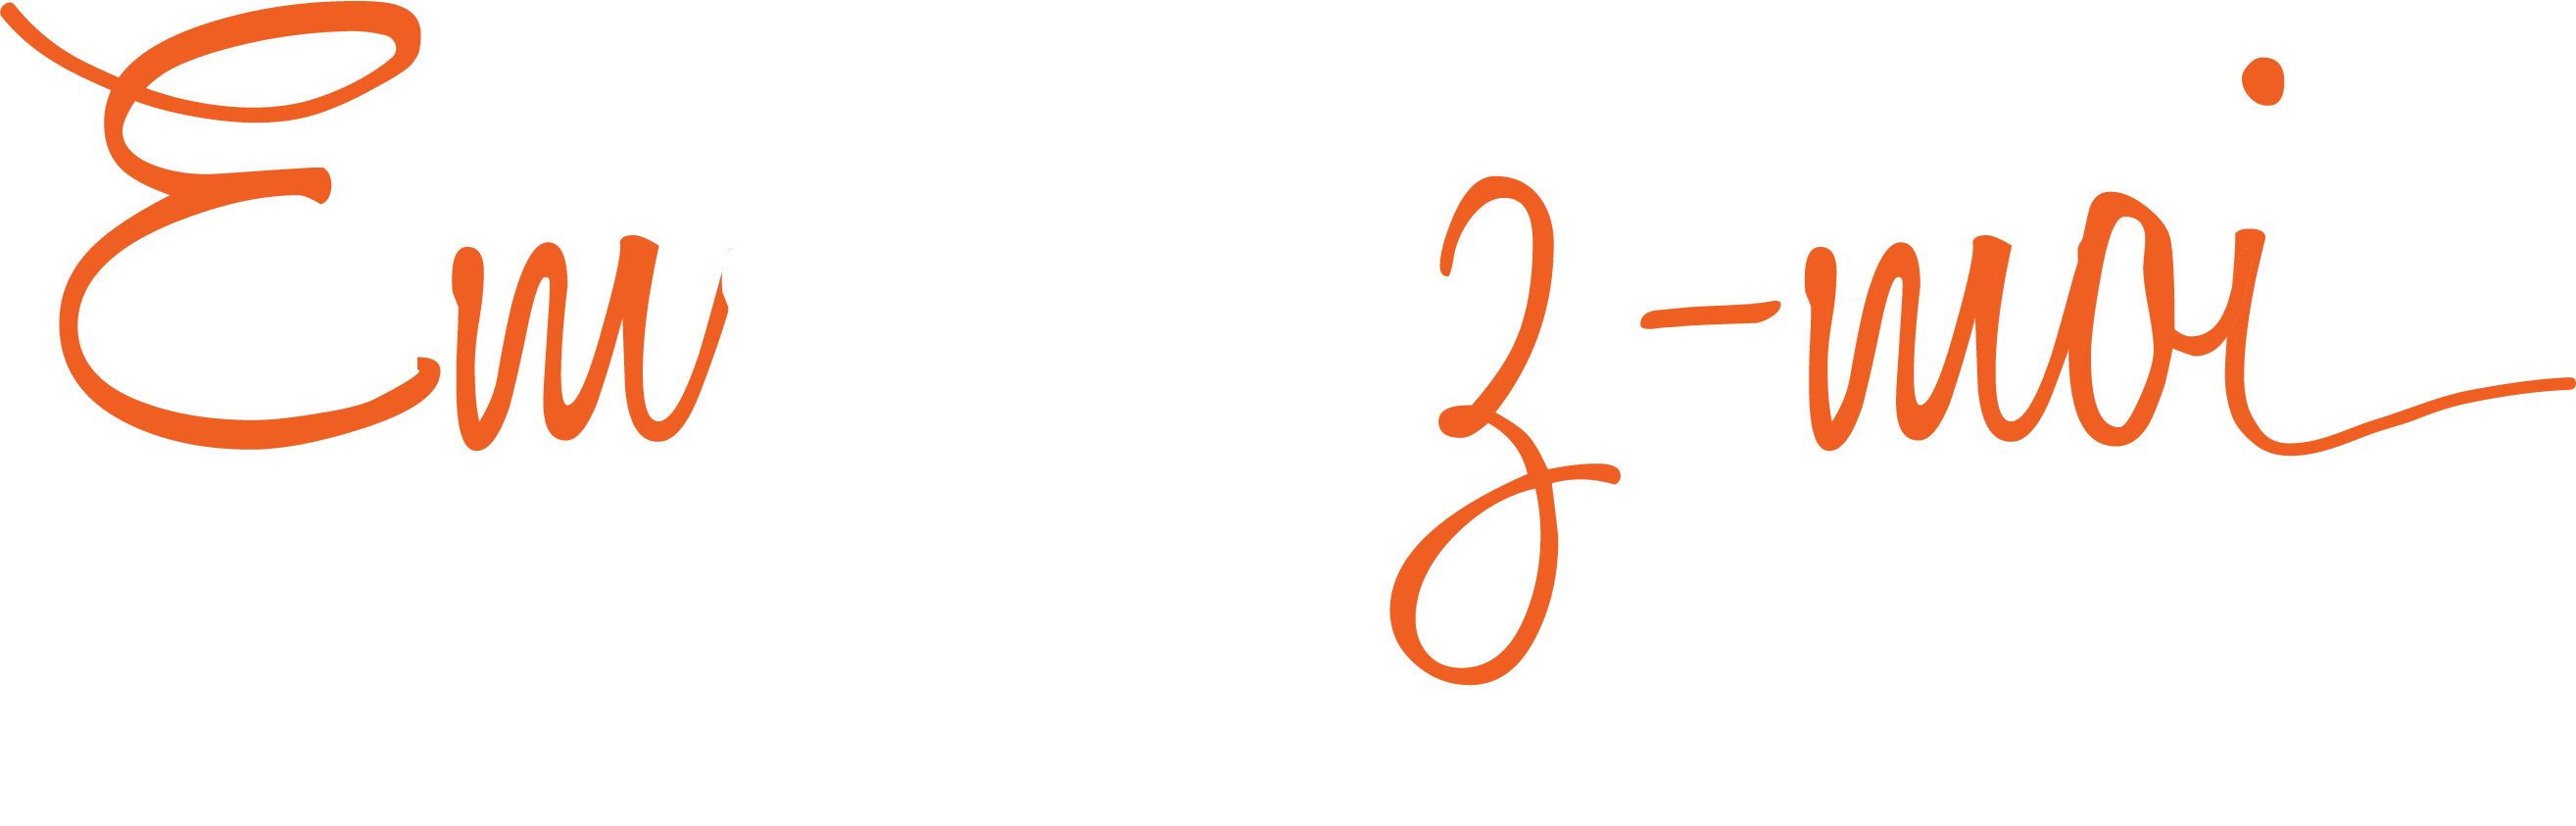 Logo footer Emmodez-moi, conciergerie de mode à Lyon, Stylisme, Personal Shopping, Conseil en Image, Circuit mode Lyon